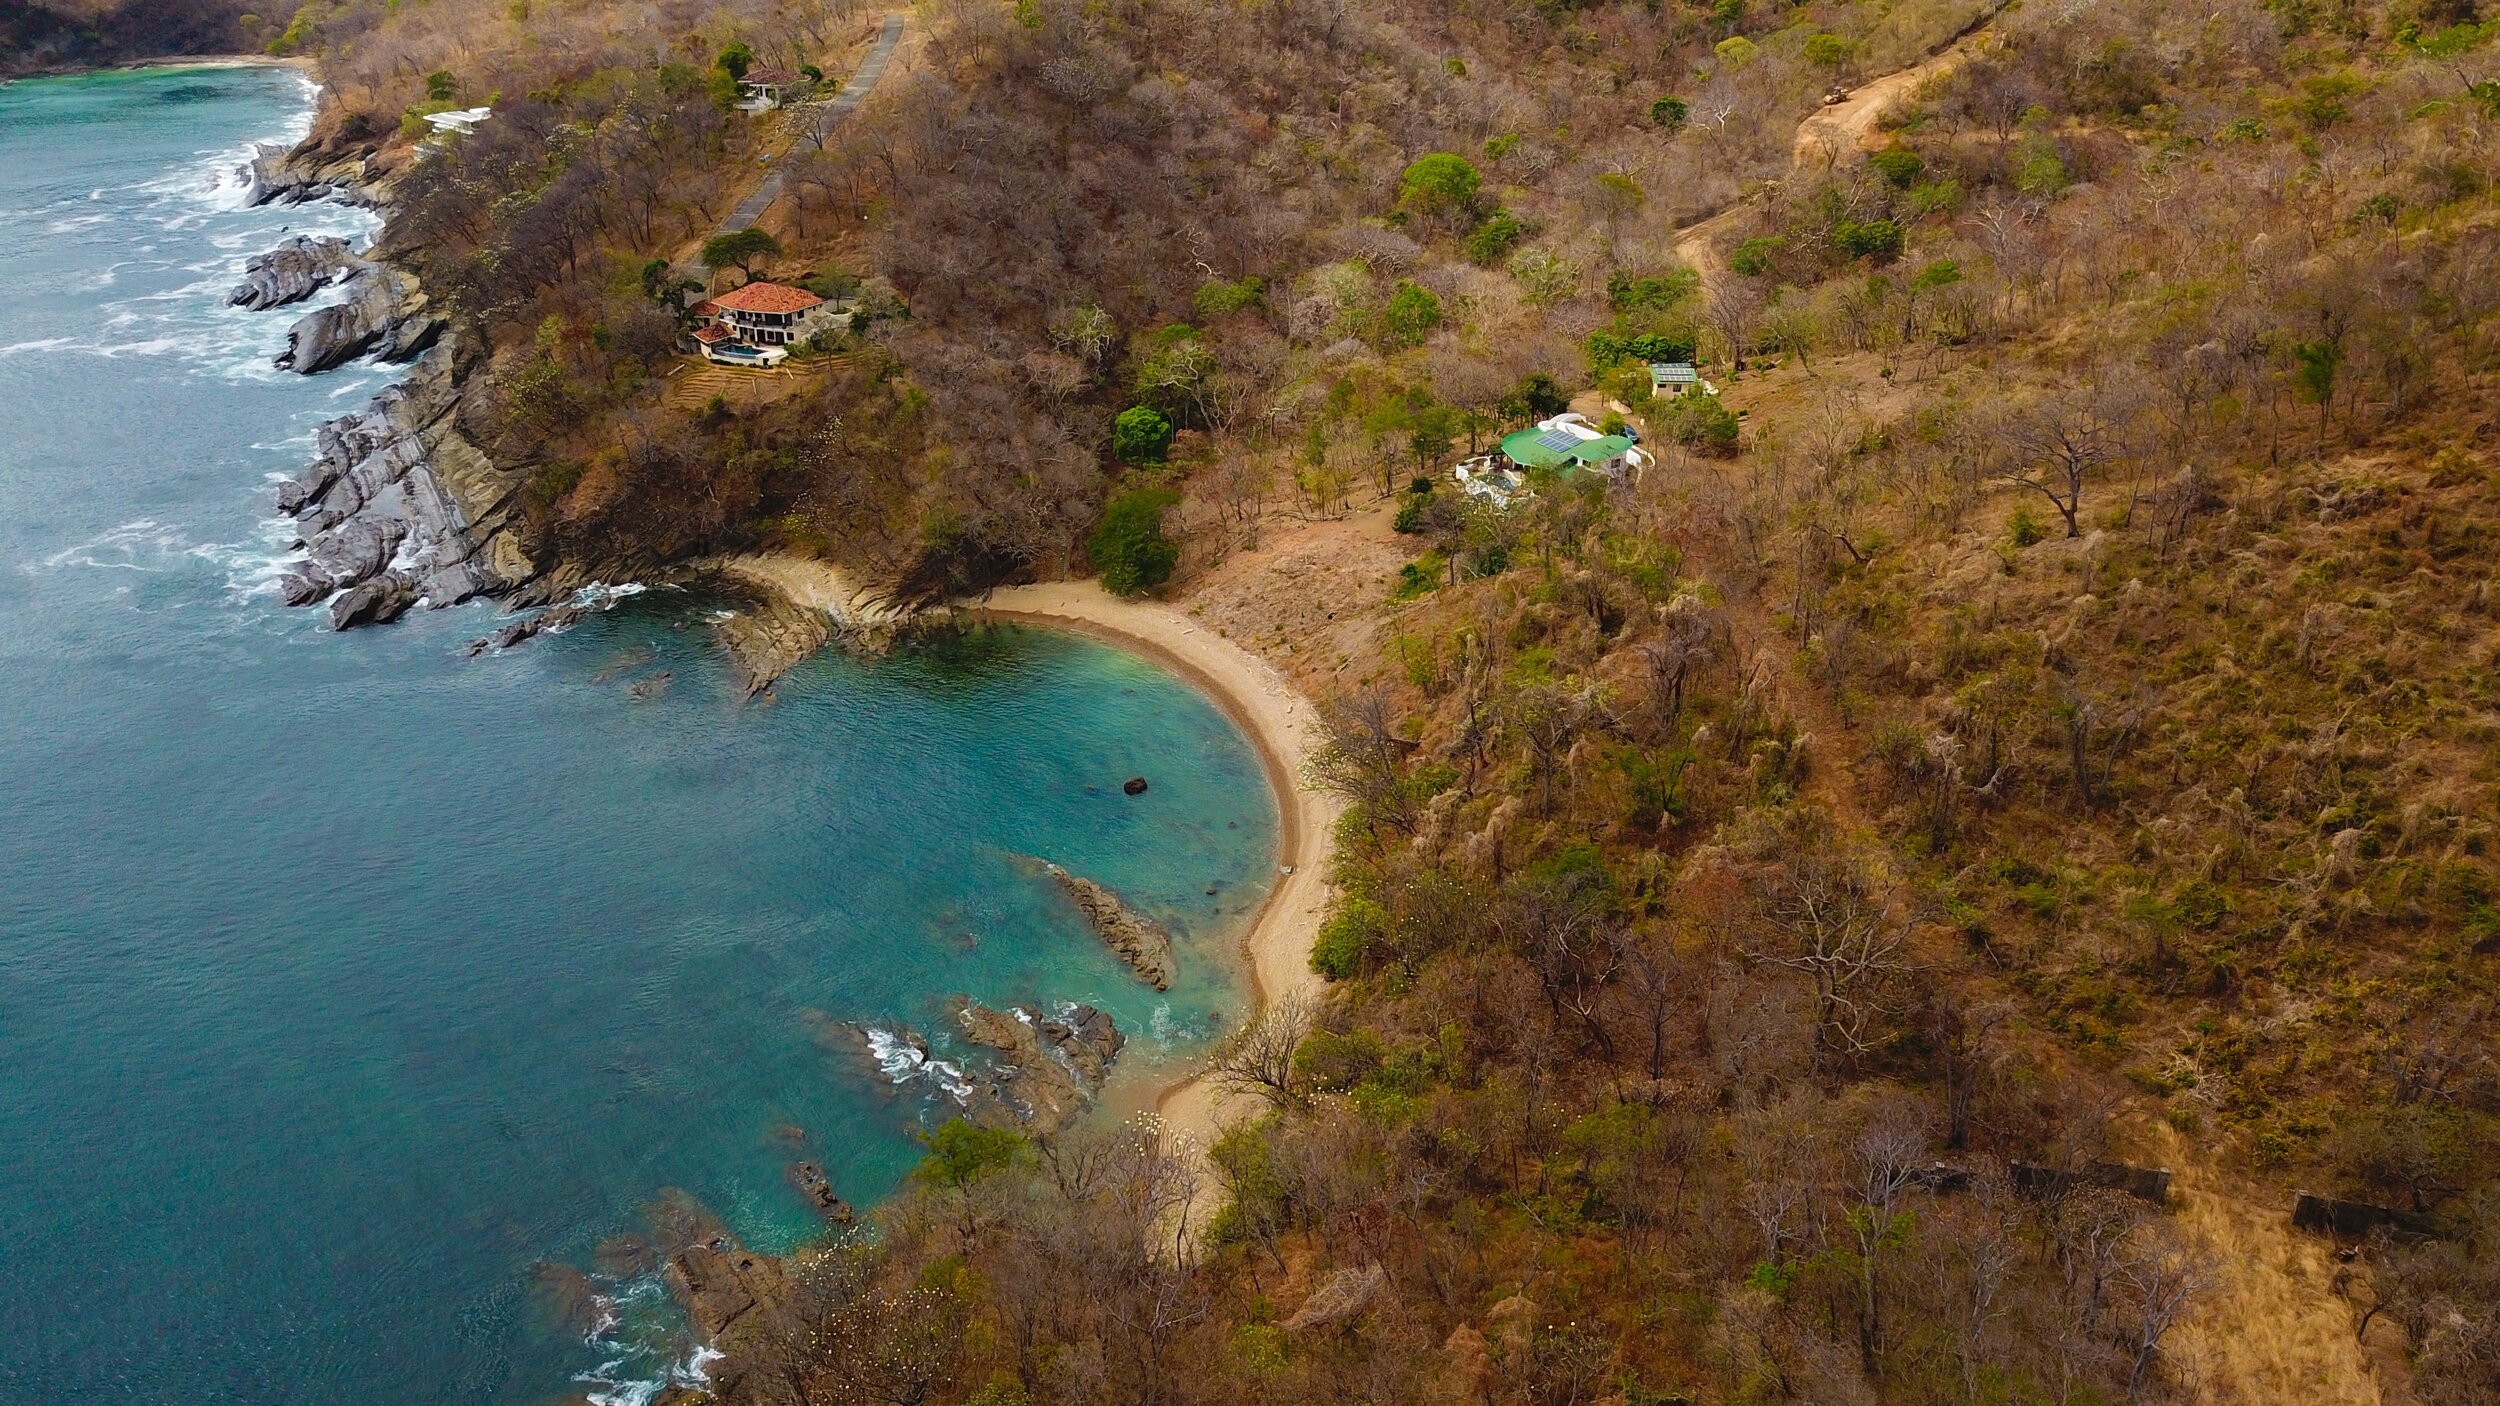 Ocean Front Property For Sale Nicaragua 7.JPEG